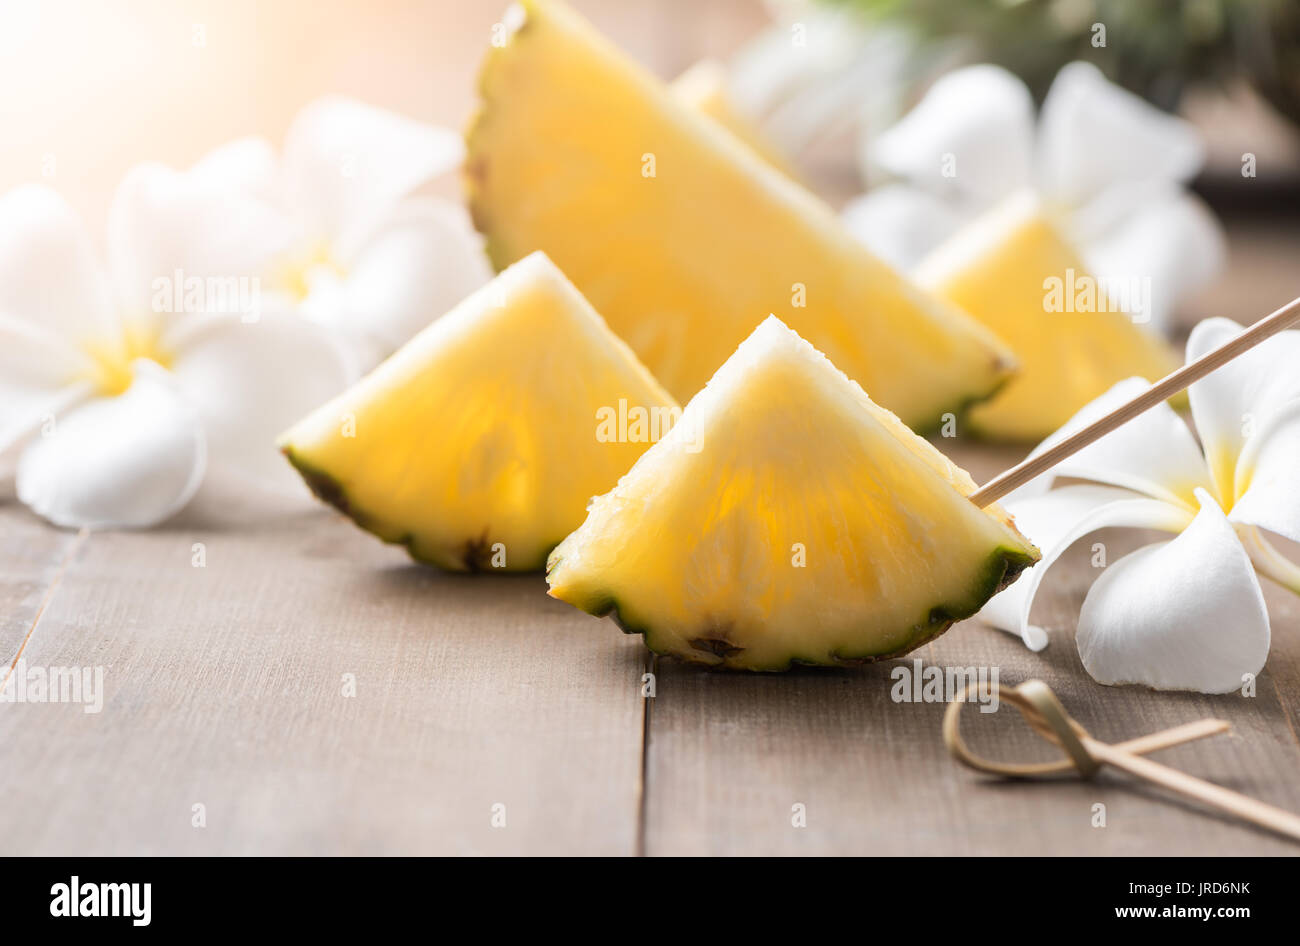 sliced pineapple on wood background, popular fruit in summer season Stock Photo